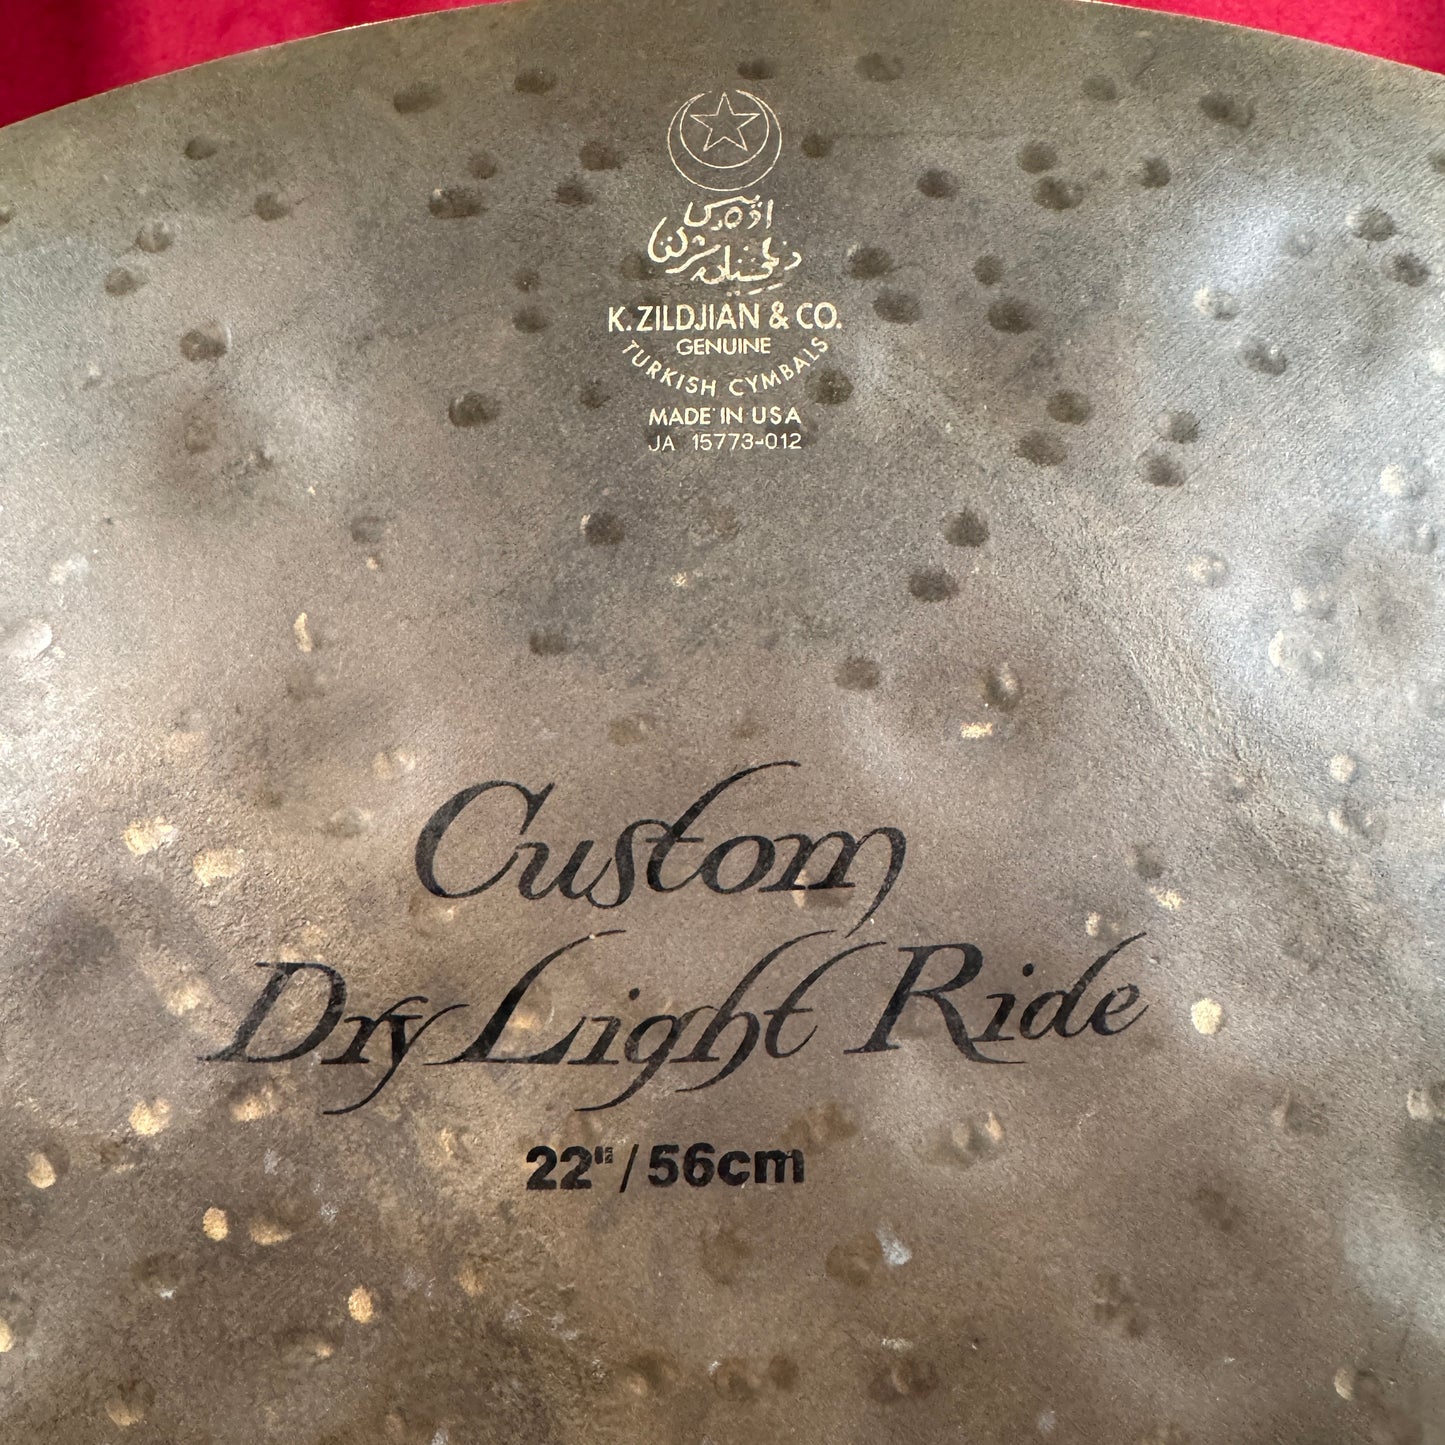 22" Zildjian K Custom Dry Light Ride Cymbal 2756g *Video Demo*